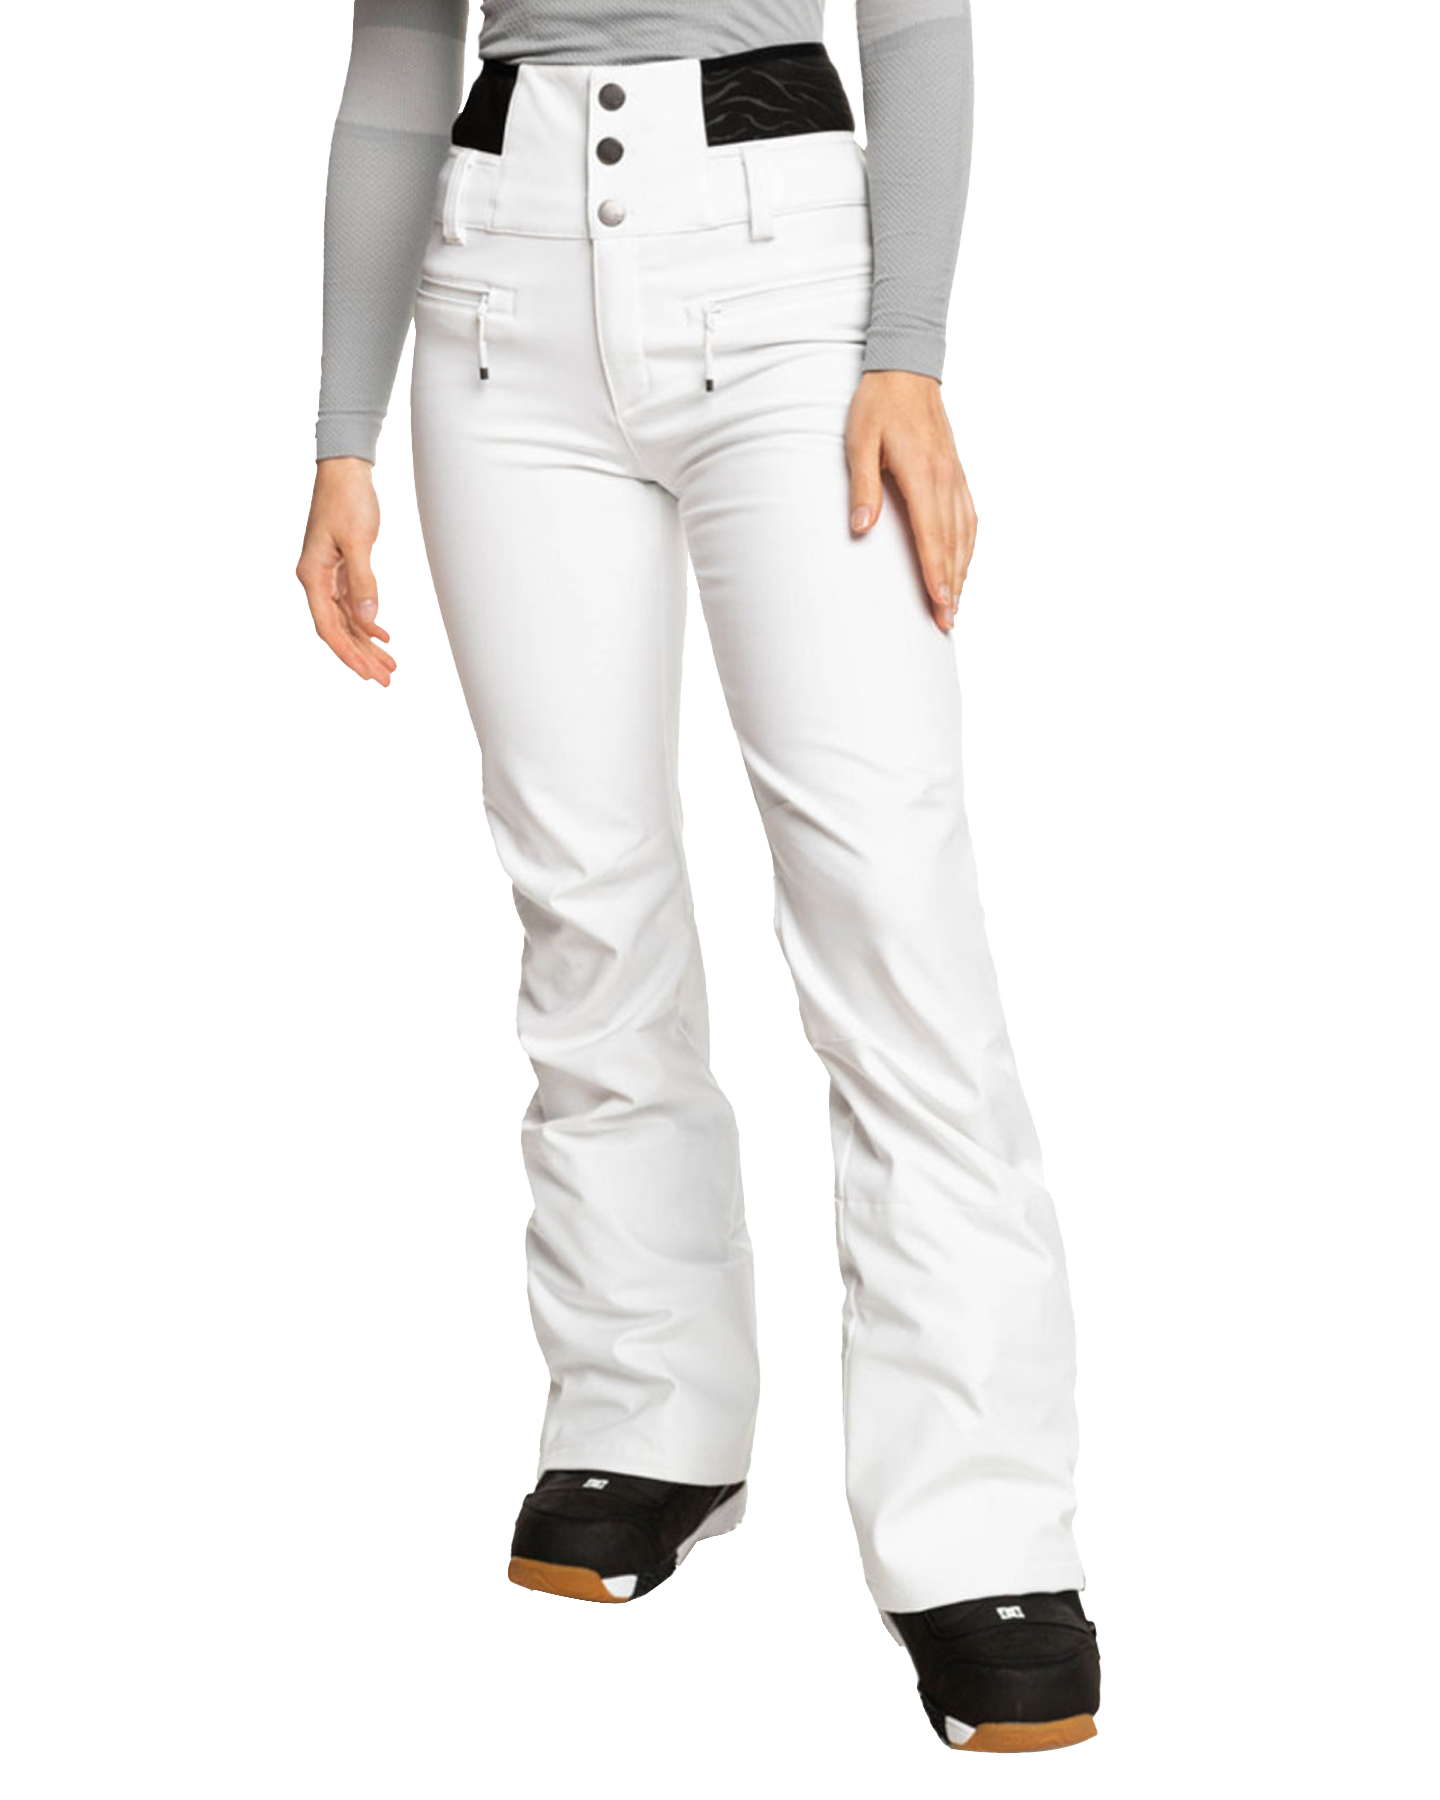 Roxy Women's Rising High Technical Snow Pants - Bright White Women's Snow Pants - SnowSkiersWarehouse